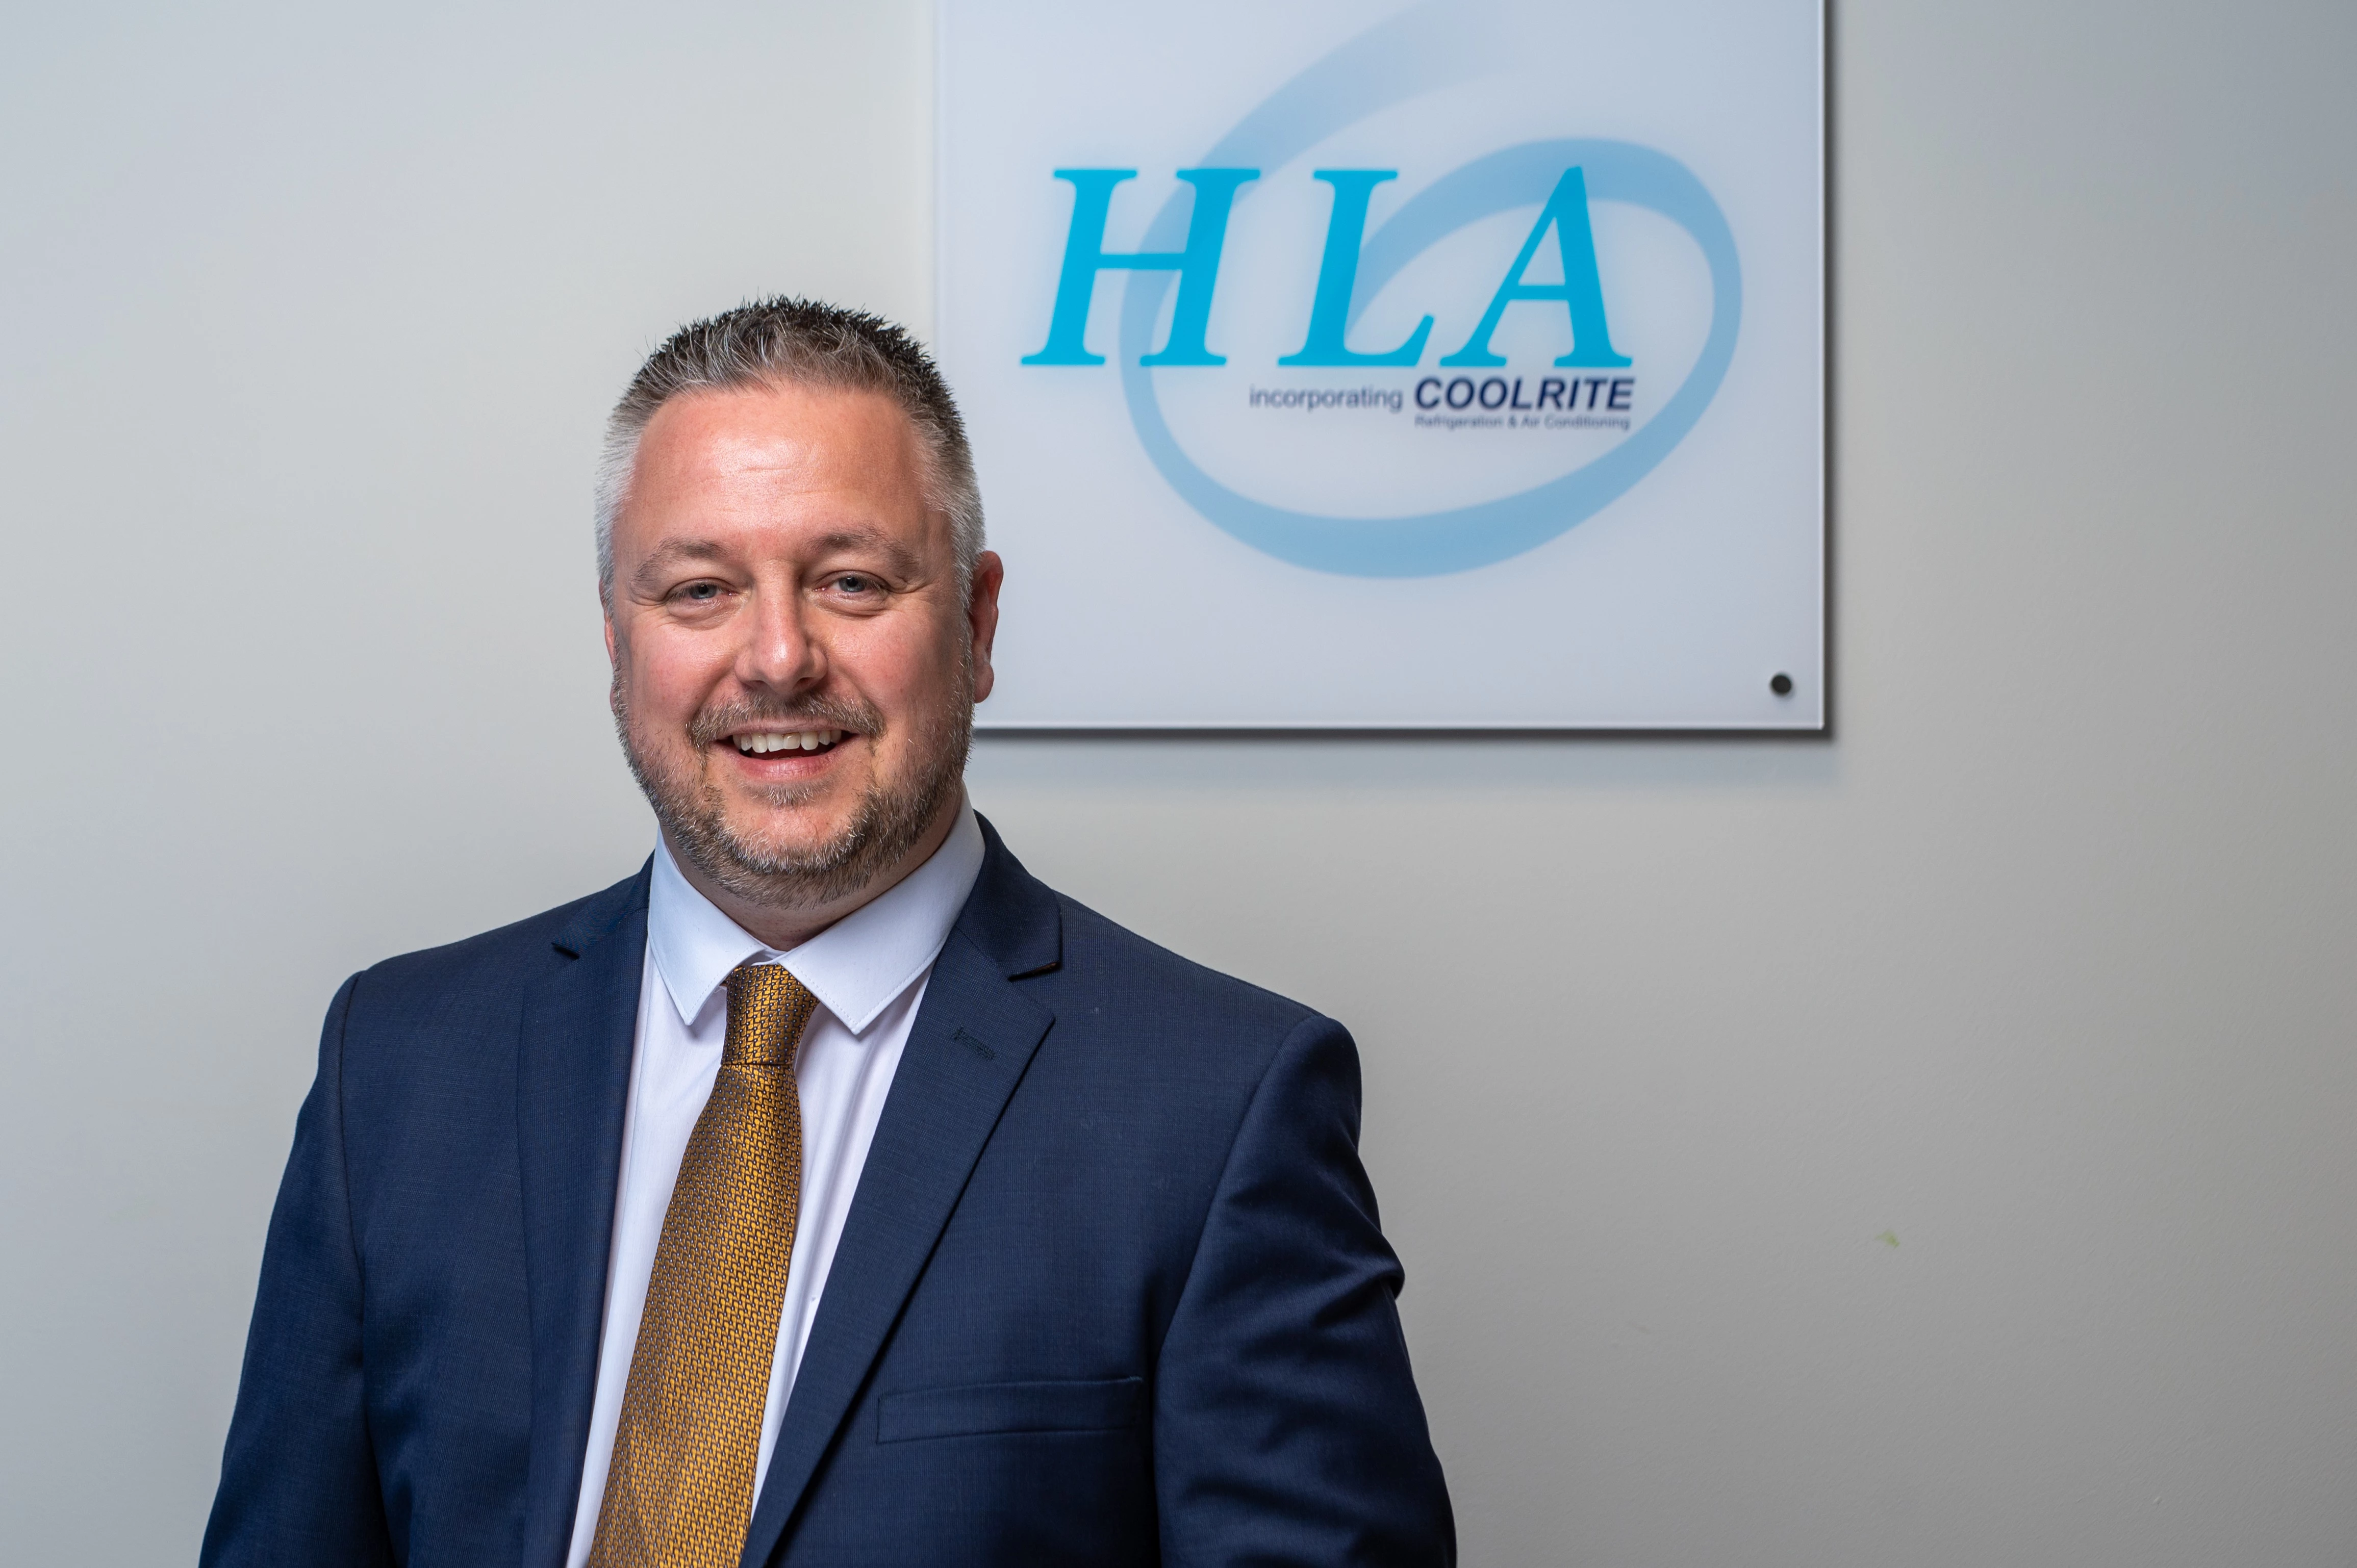 HLA Services